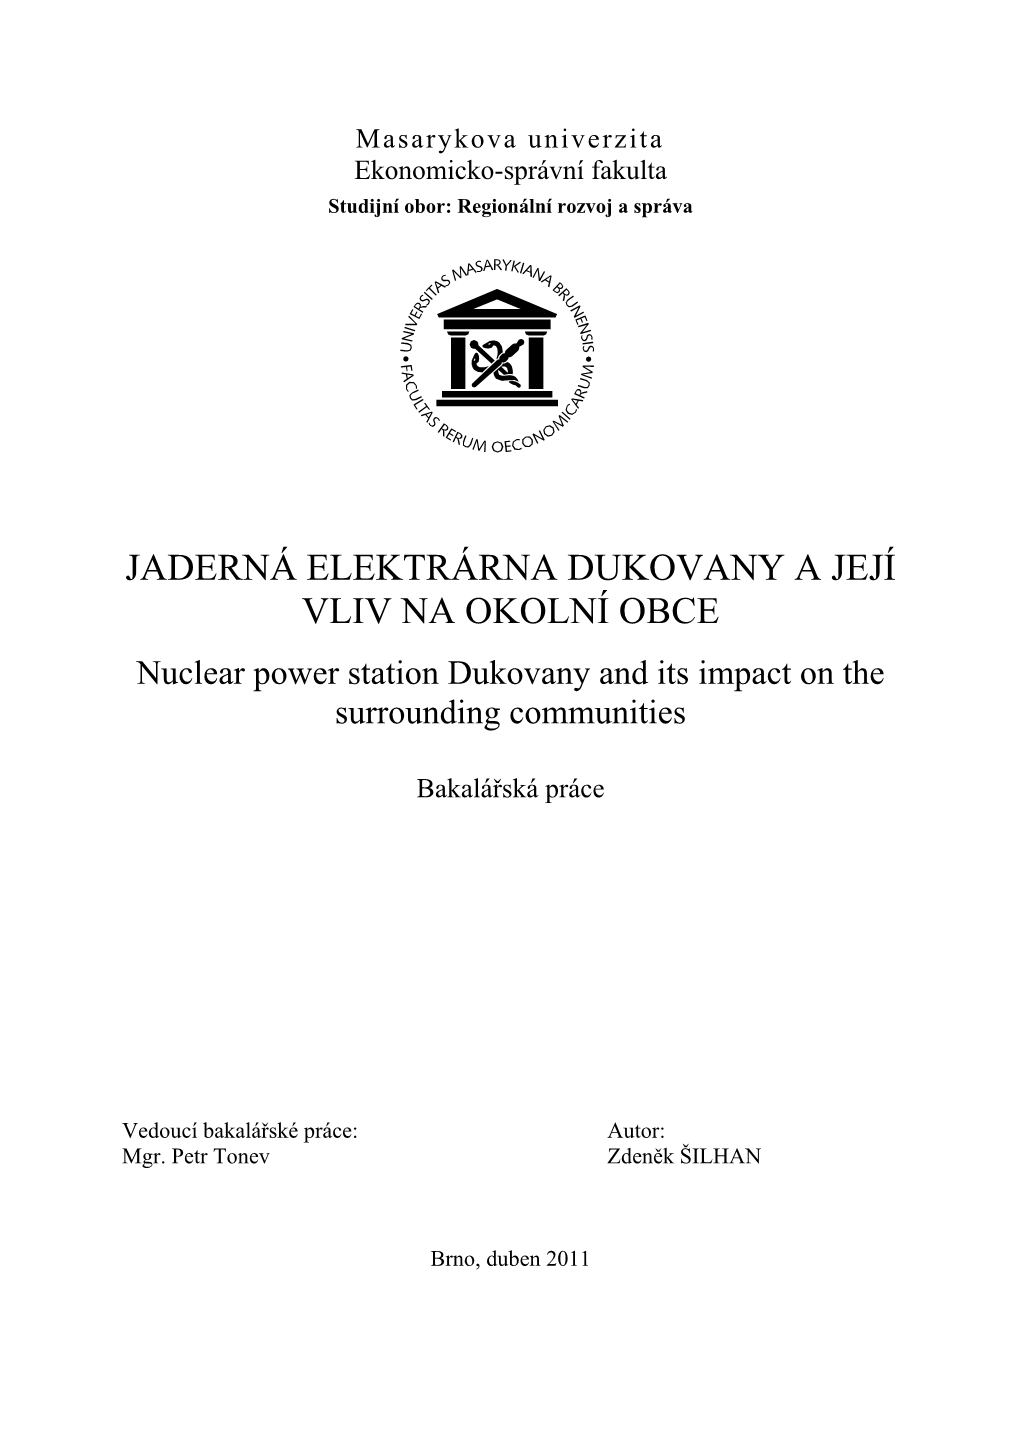 2. Podpora Okolí Jaderné Elektrárny Dukovany – Obecné Vymezení a Nadace ČEZ